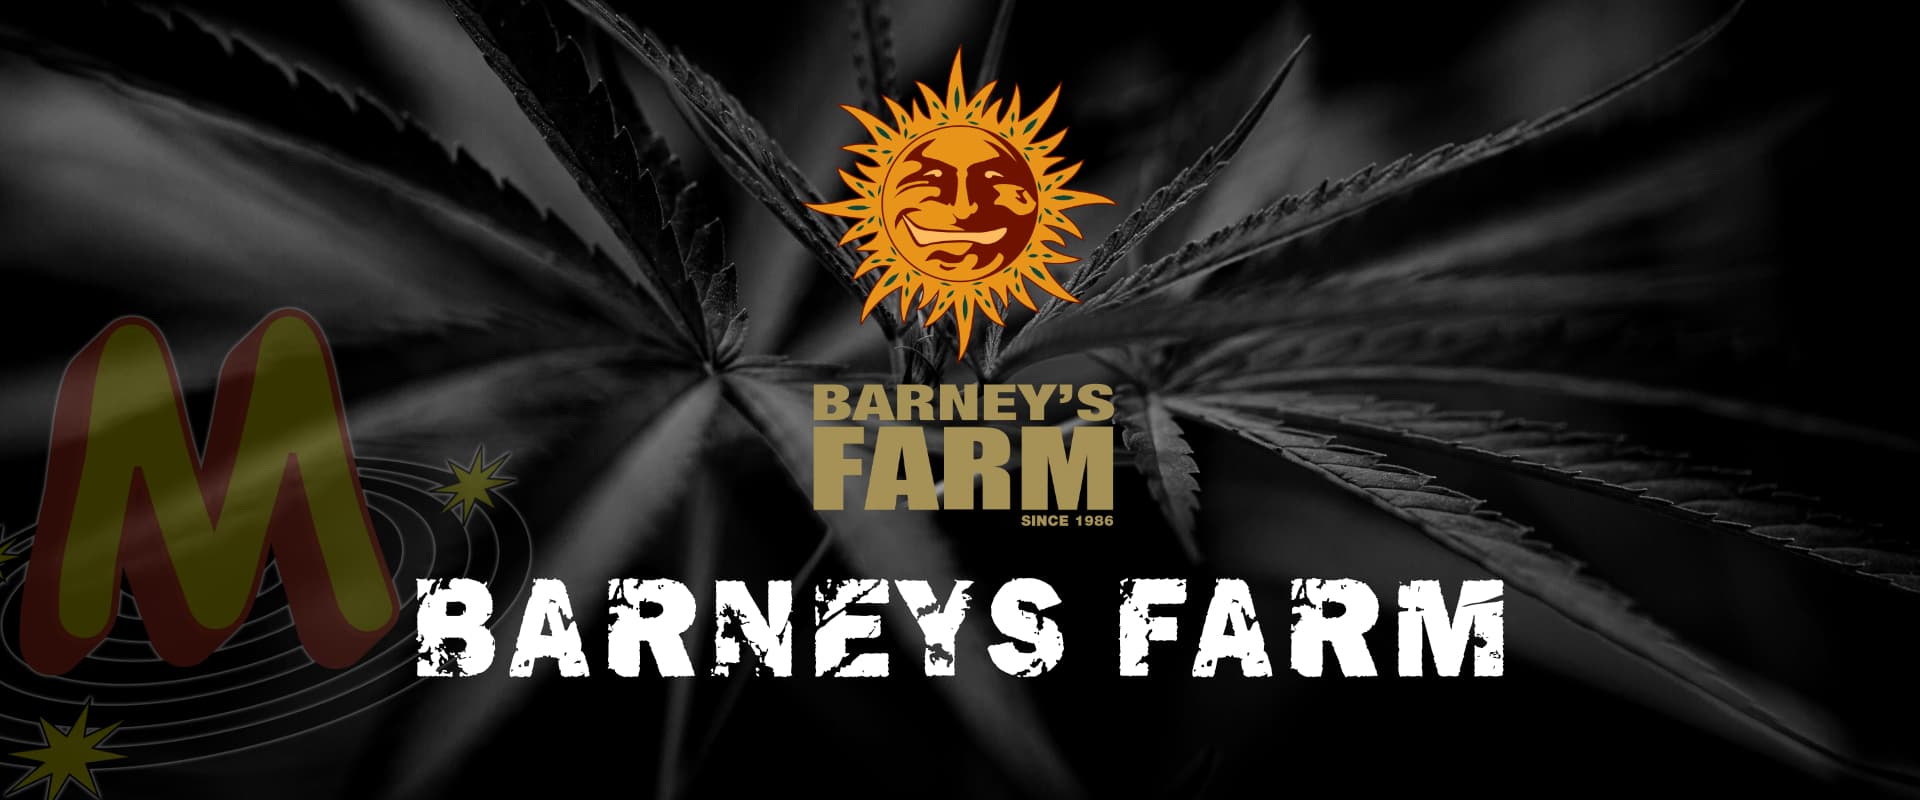 Barneys Farm Banner